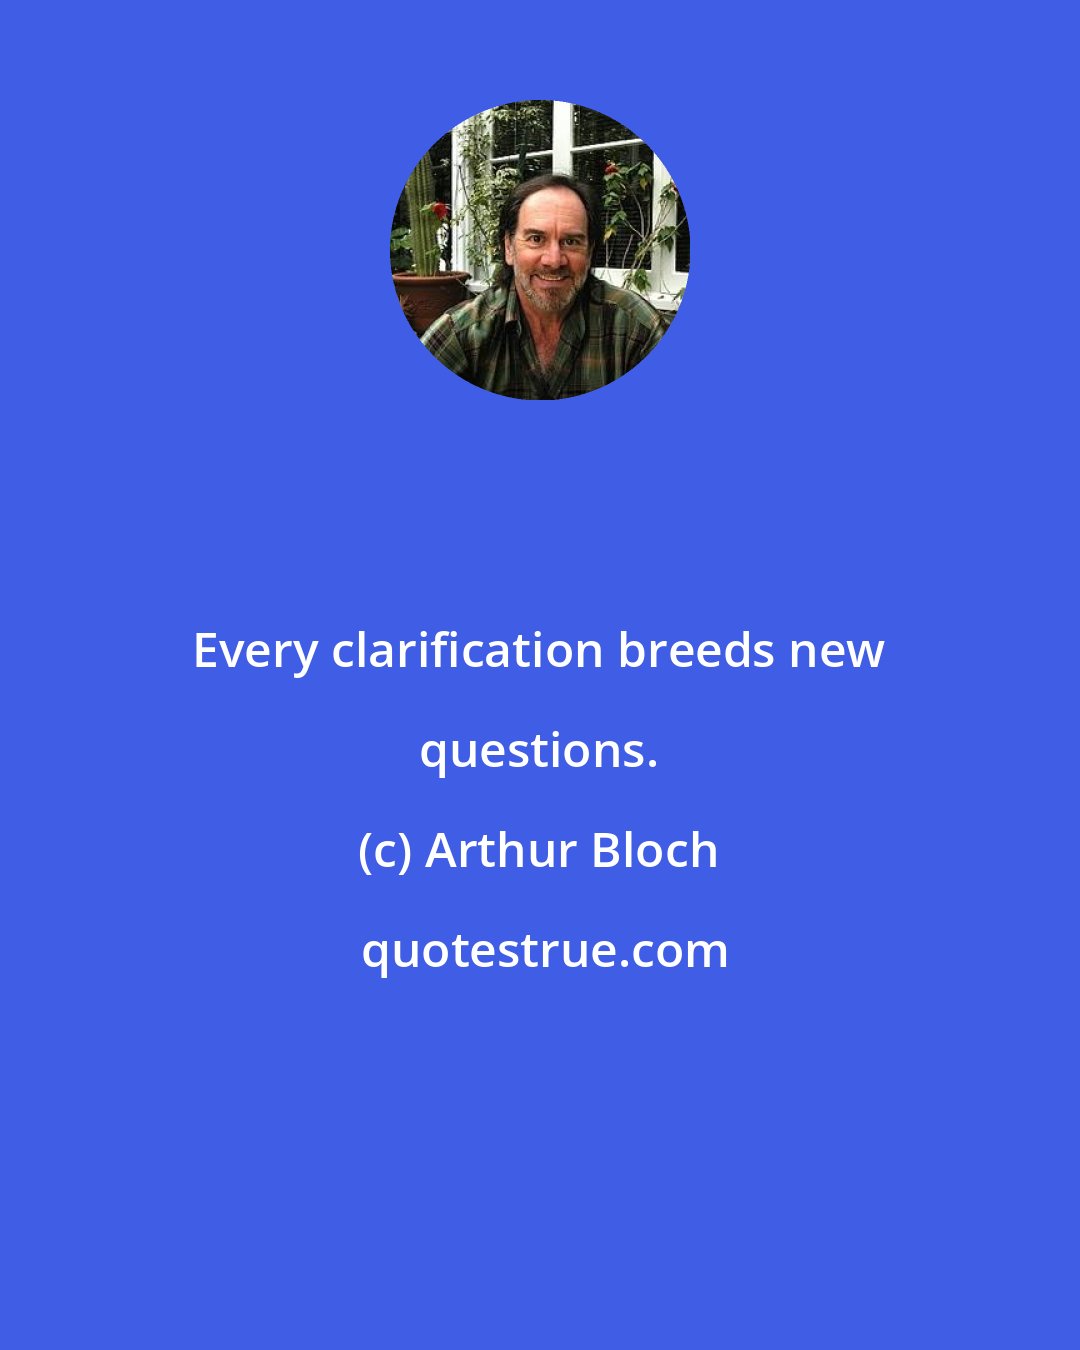 Arthur Bloch: Every clarification breeds new questions.